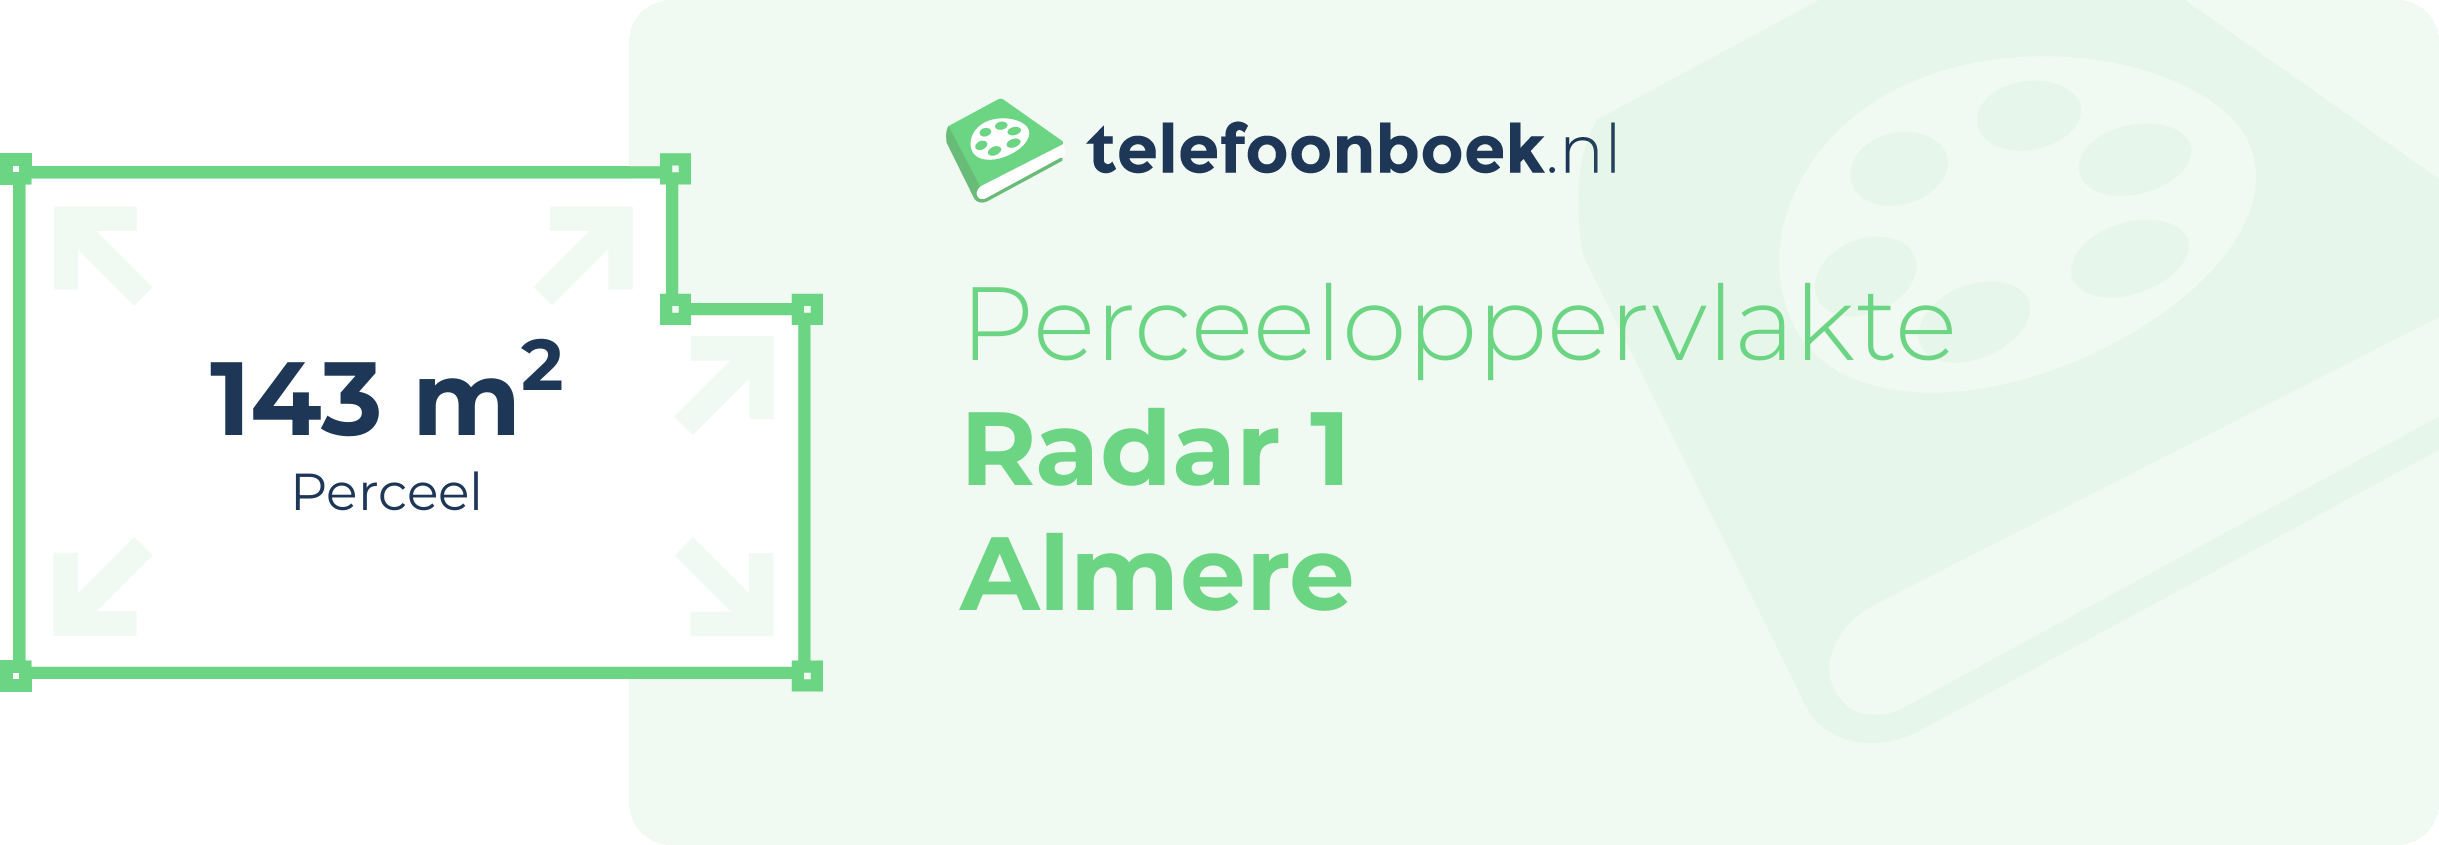 Perceeloppervlakte Radar 1 Almere